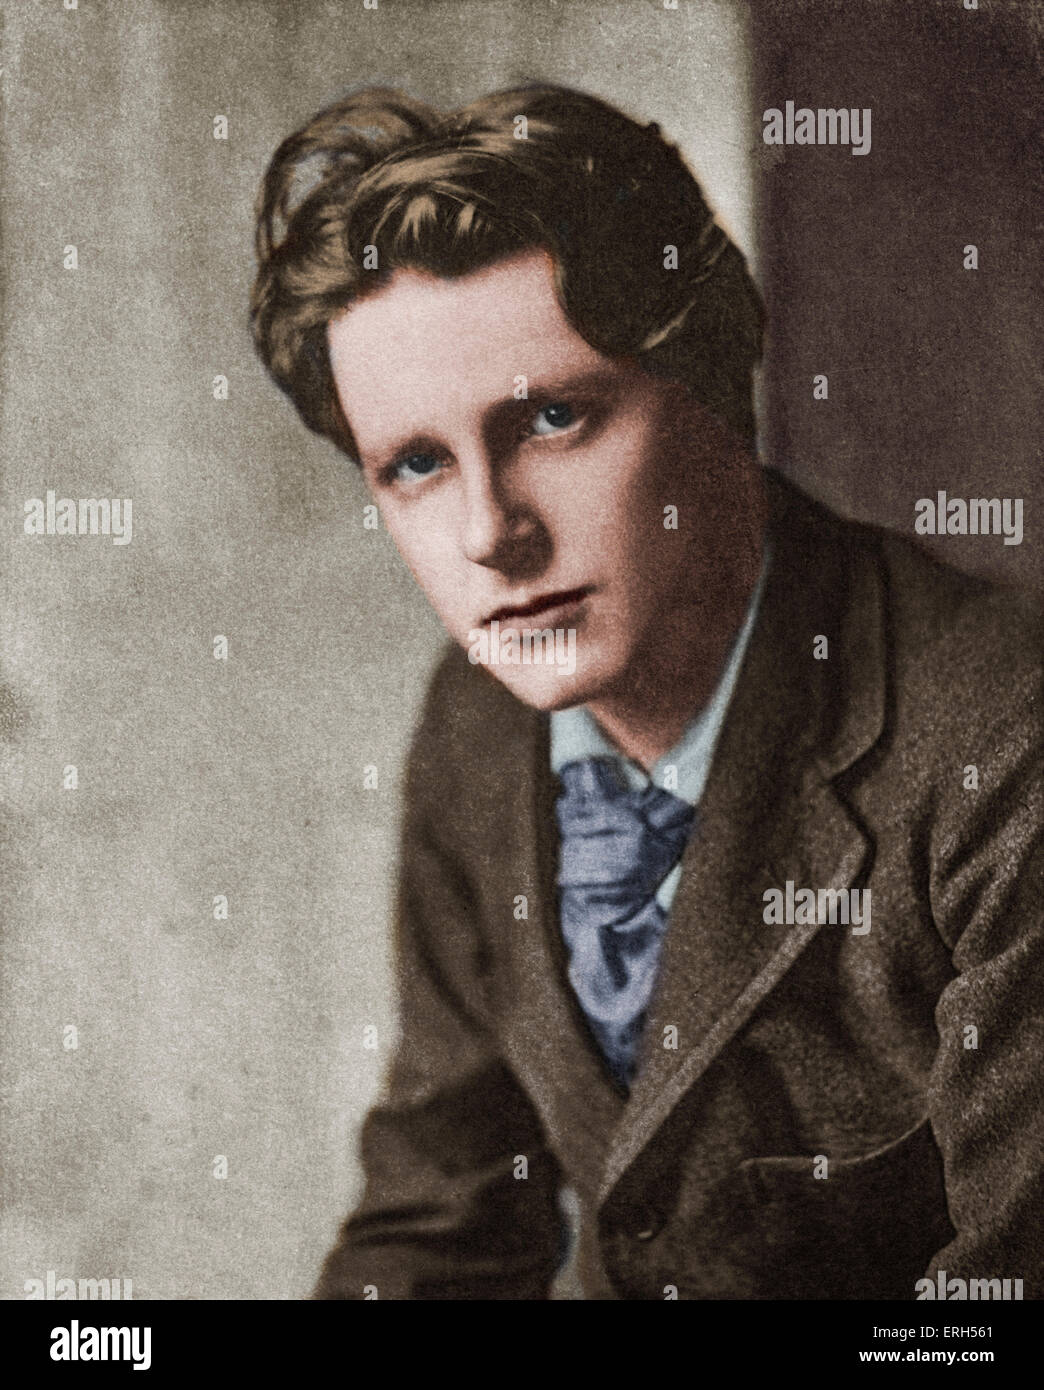 Rupert Chawner Brooke   English war  poet 3 August  1887 –  23 April  1915. Tragic death. Colourised version. Stock Photo